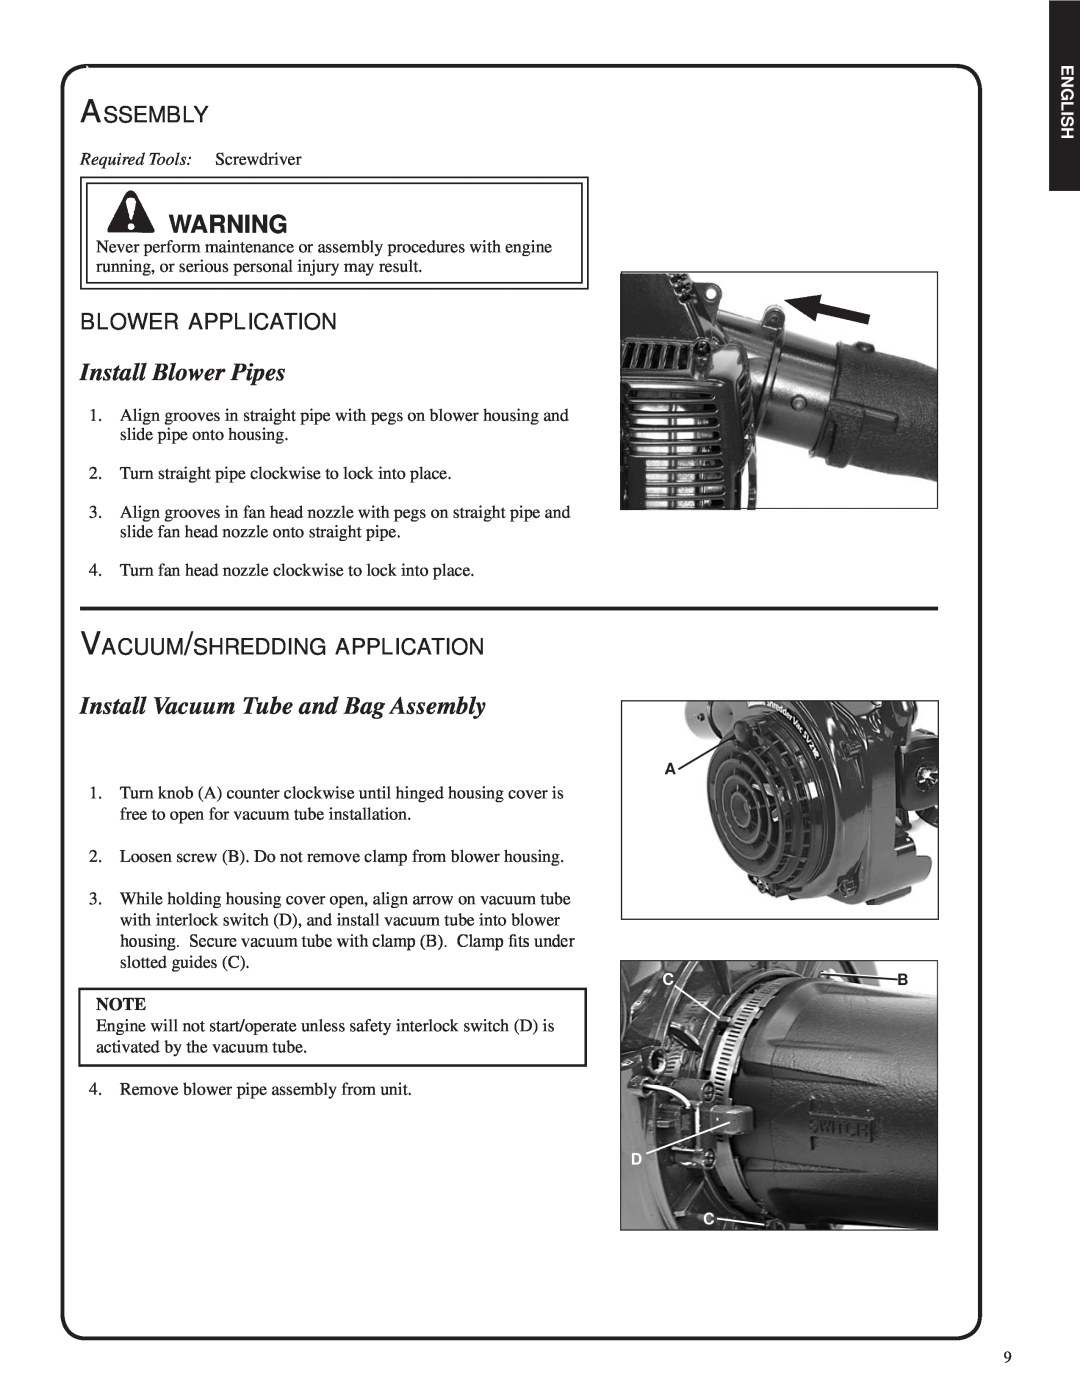 Shindaiwa 82052, SV212 manual Install Blower Pipes, Install Vacuum Tube and Bag Assembly, blower application, English 